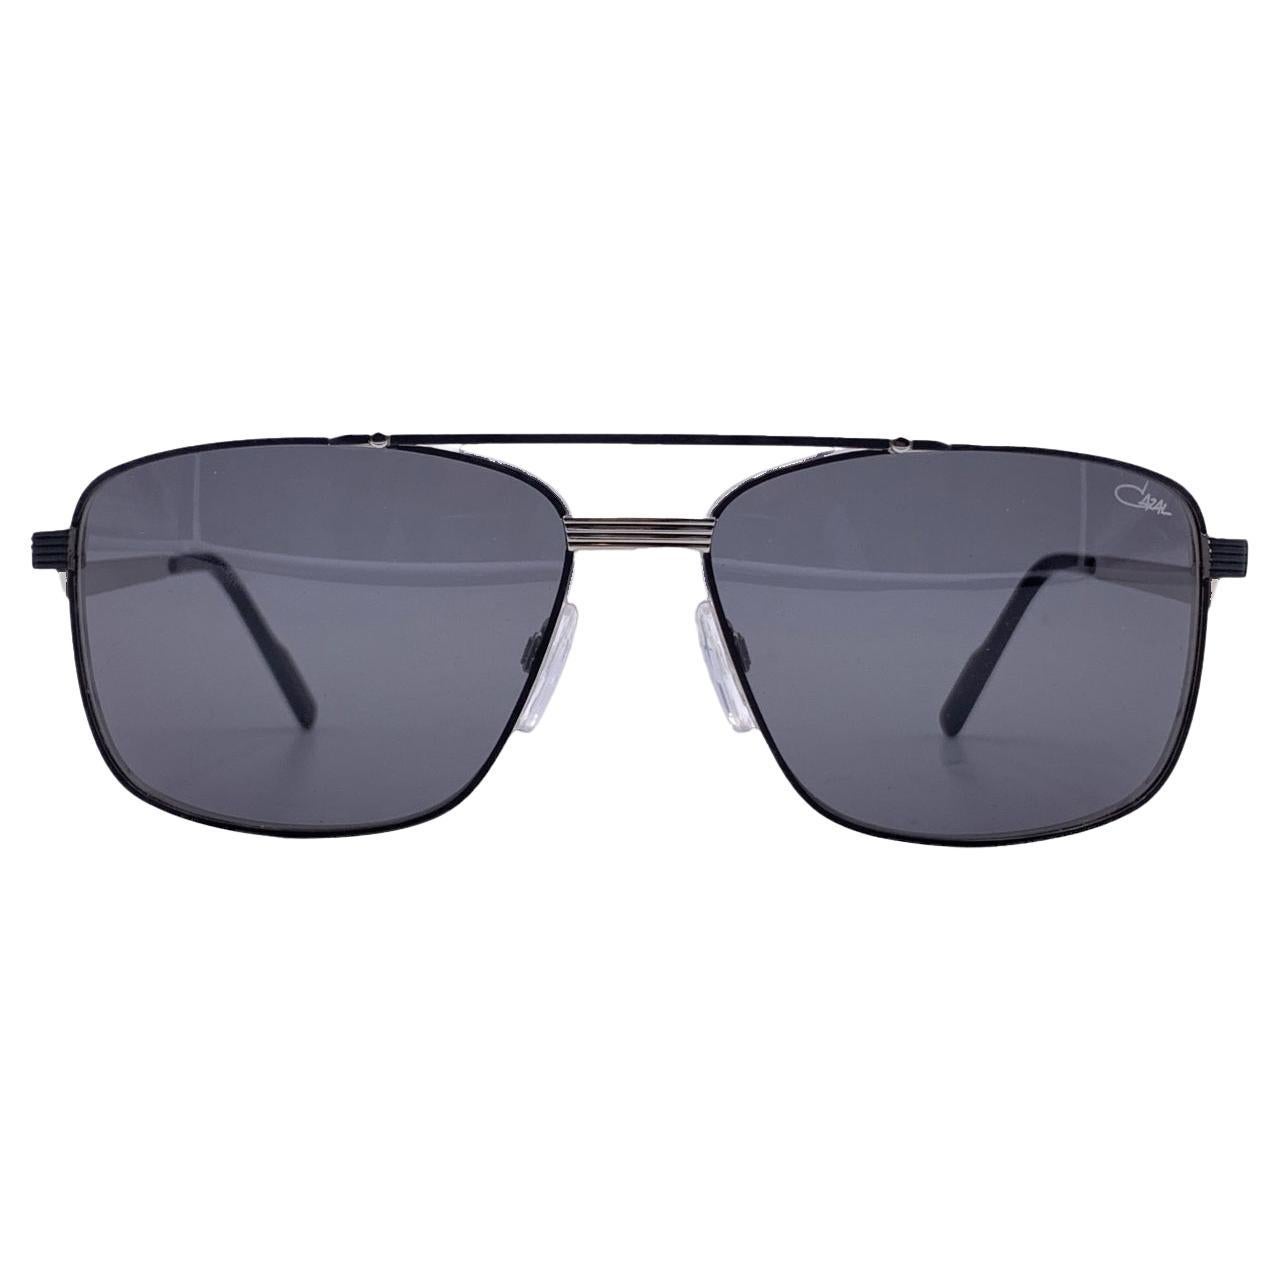 Cazal Black Metal Aviator Sunglasses Mod. 9101 002 63/16 140 mm